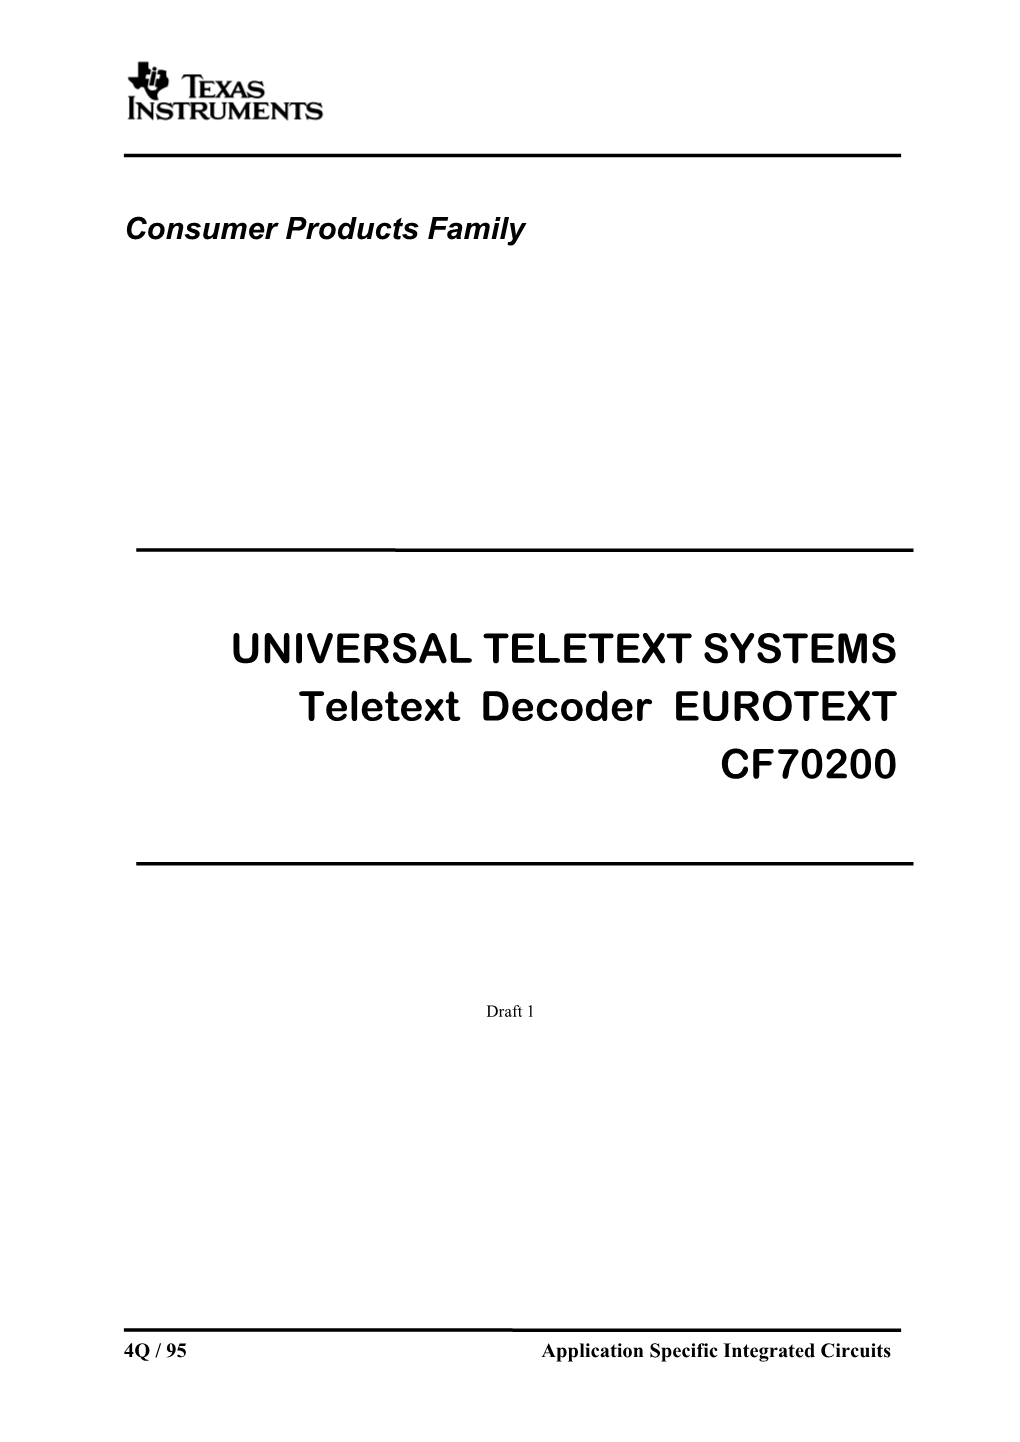 UNIVERSAL TELETEXT SYSTEMS Teletext Decoder EUROTEXT CF70200